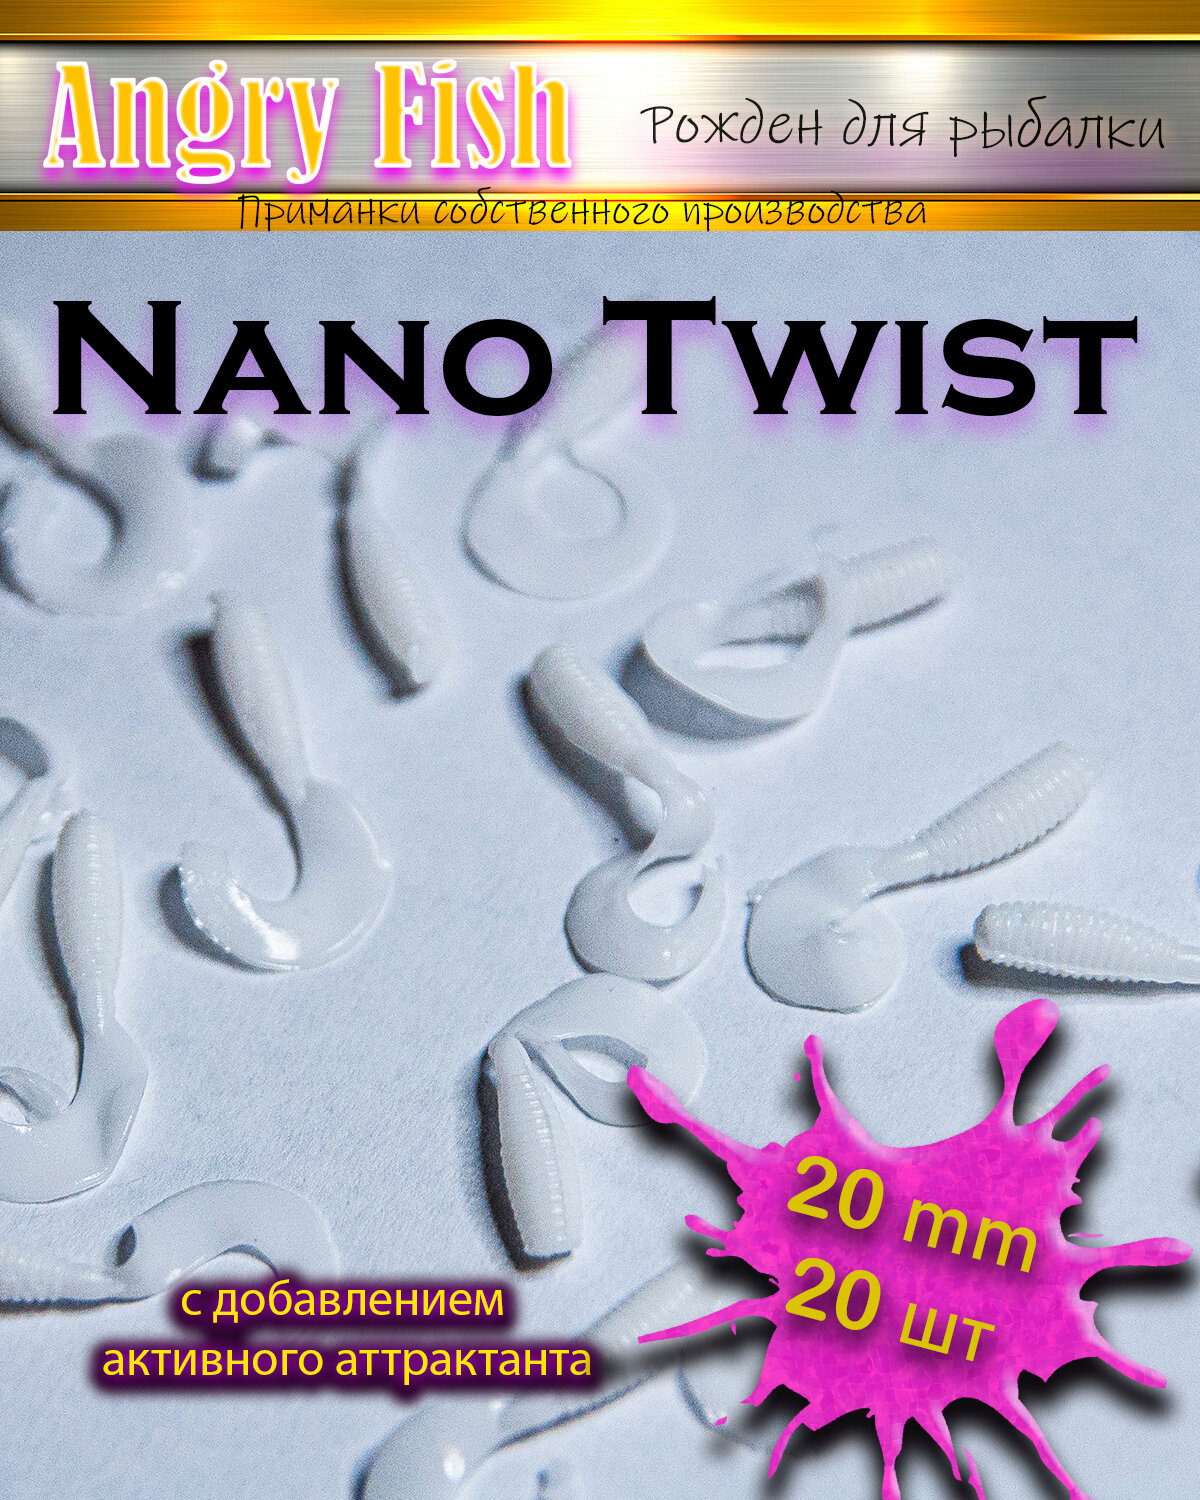 Мягкая силиконовая приманка микро твистеры Nano Twist 2.0 см (20шт) цвет: white